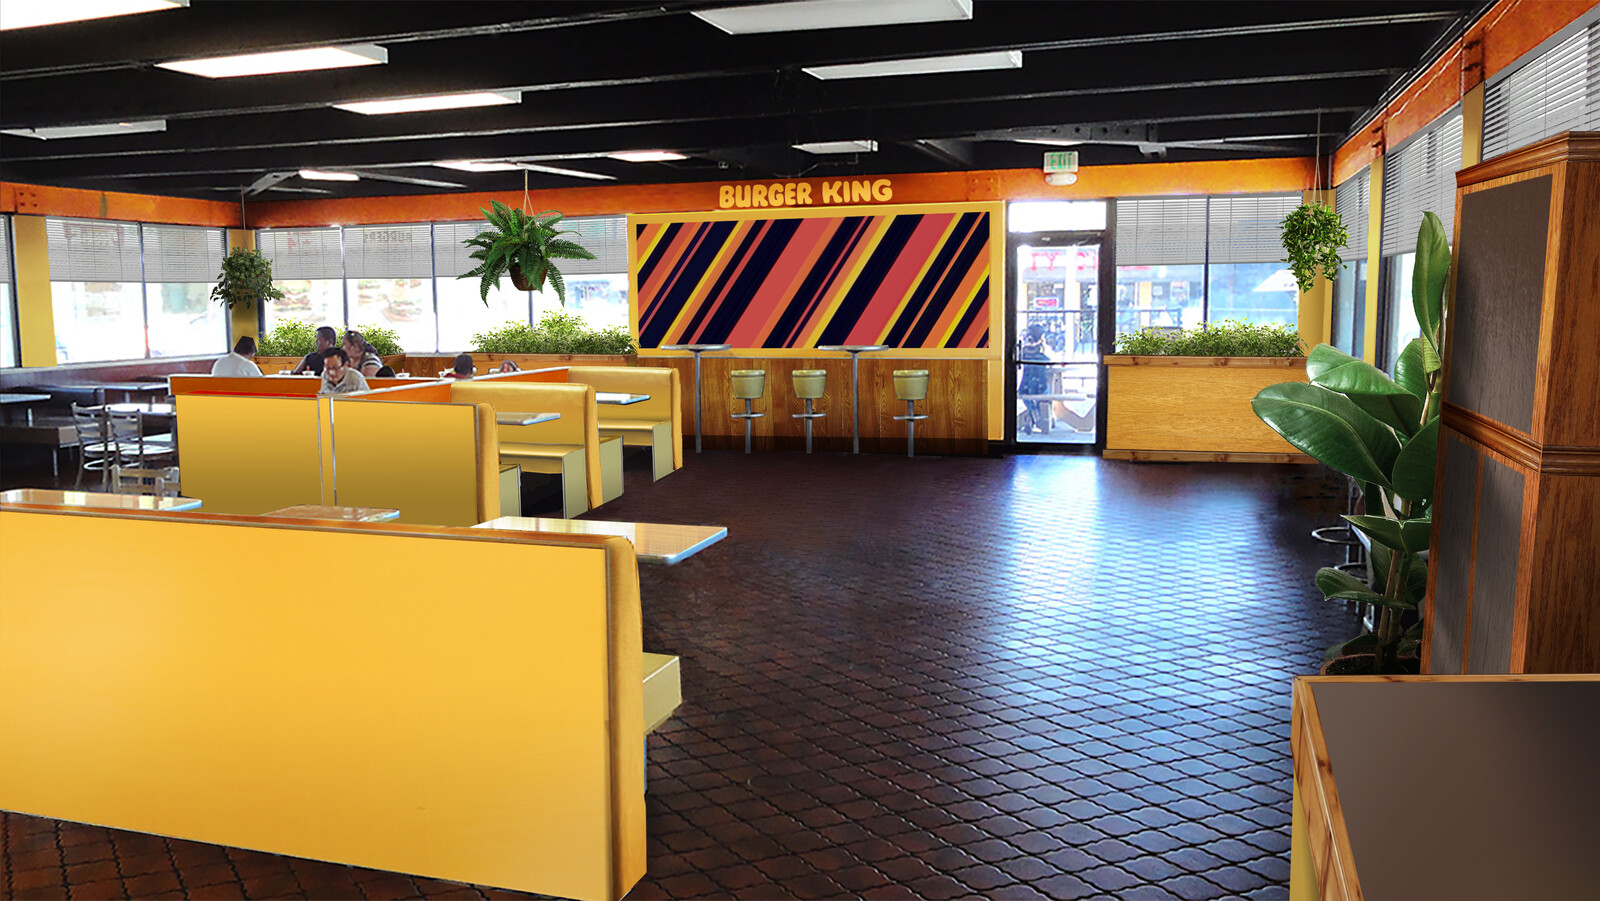 Retro Burger King set design.